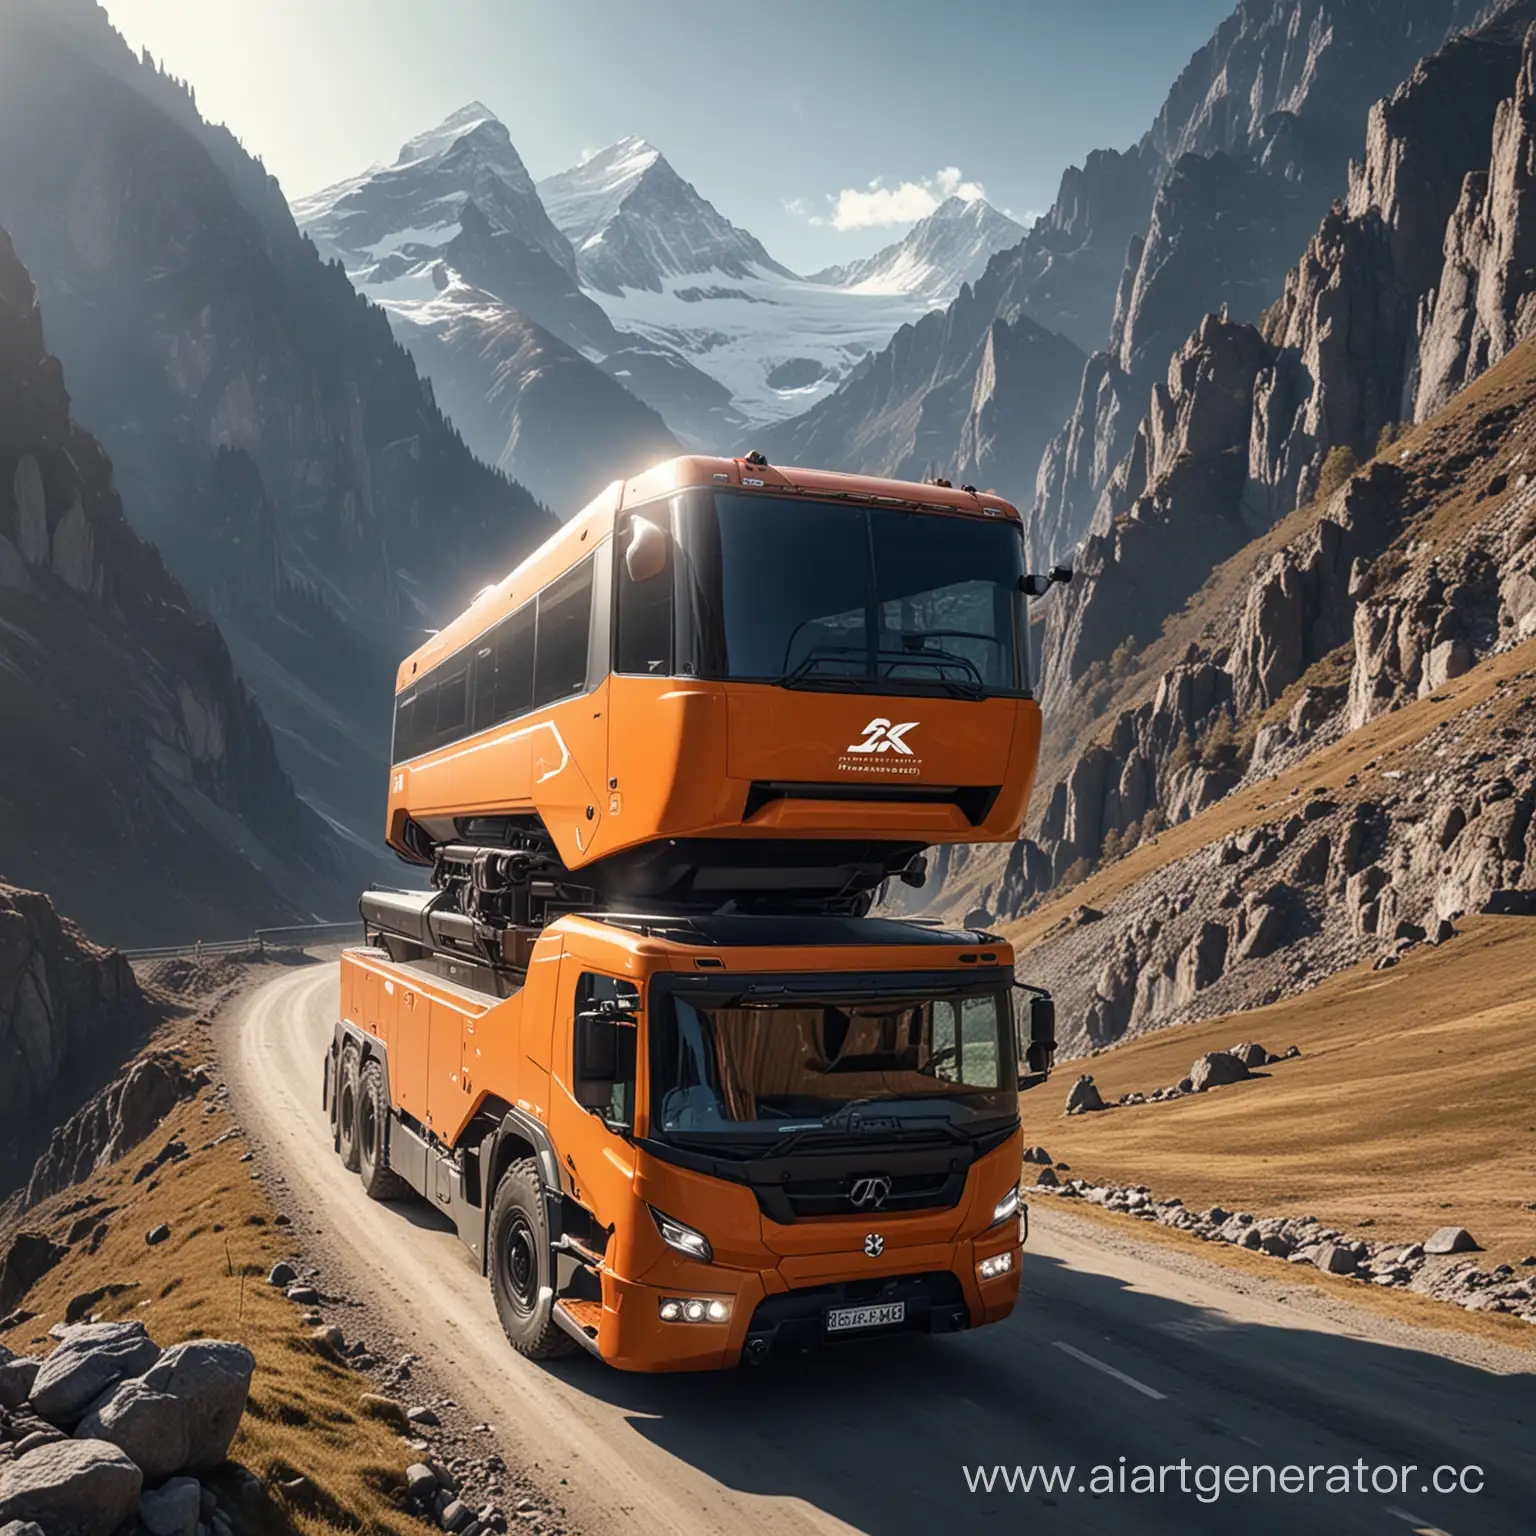 Futuristic-Mountain-Transport-in-Stunning-4K-Quality